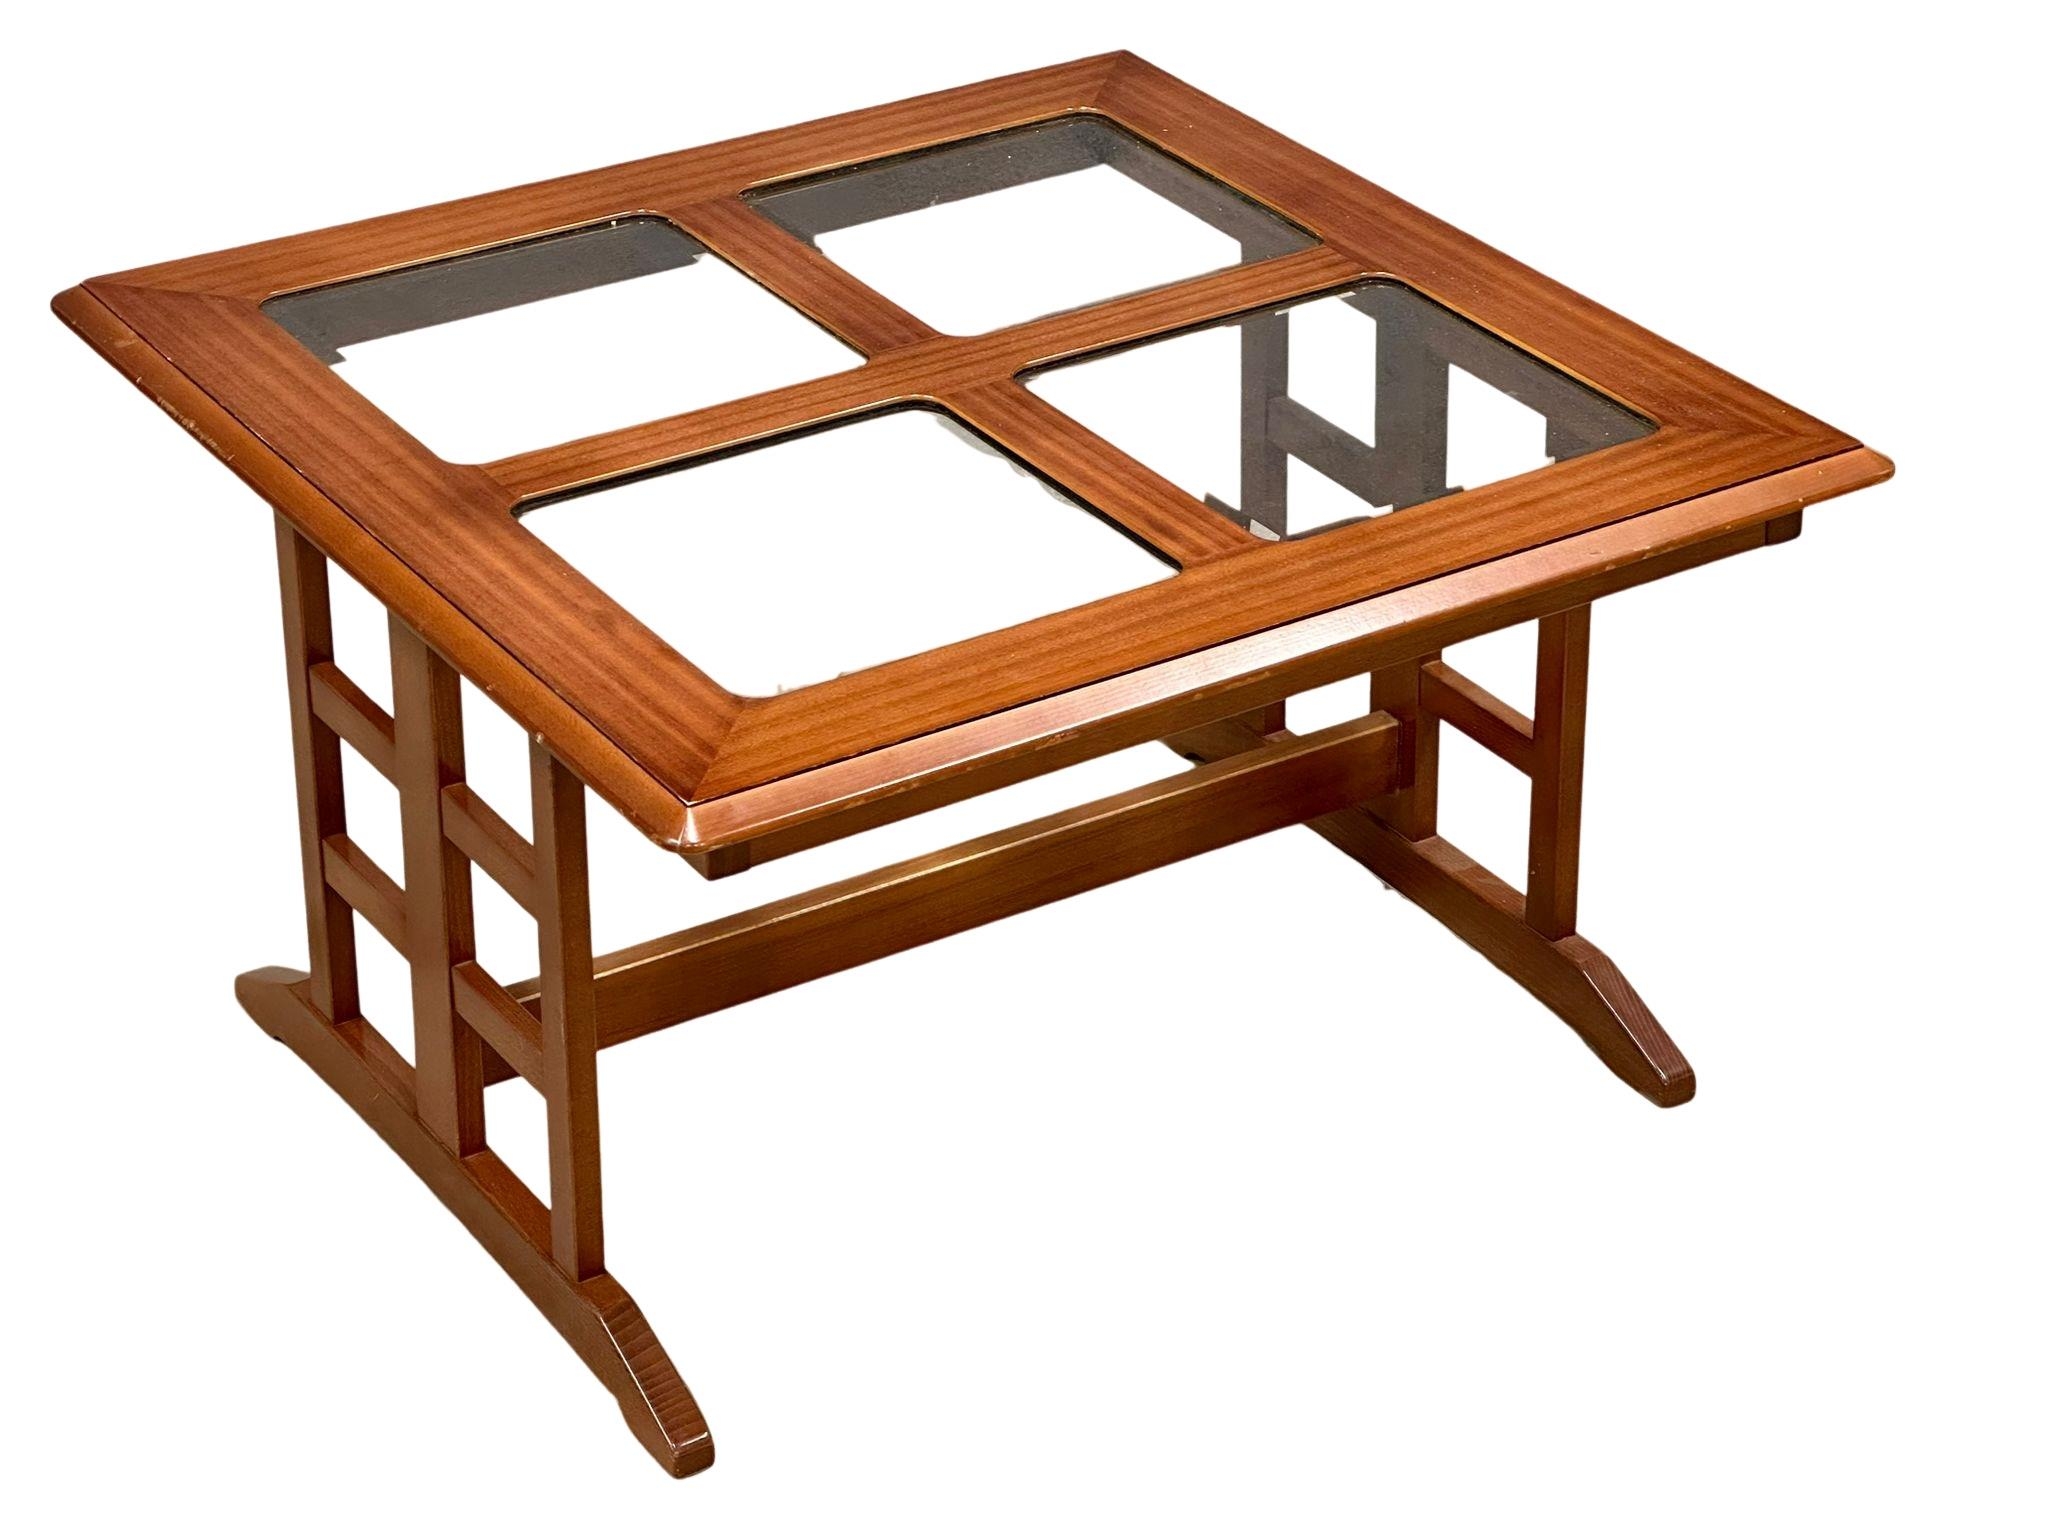 A G-Plan Mid Century glass top coffee table, 81cm x 81cm x 49cm